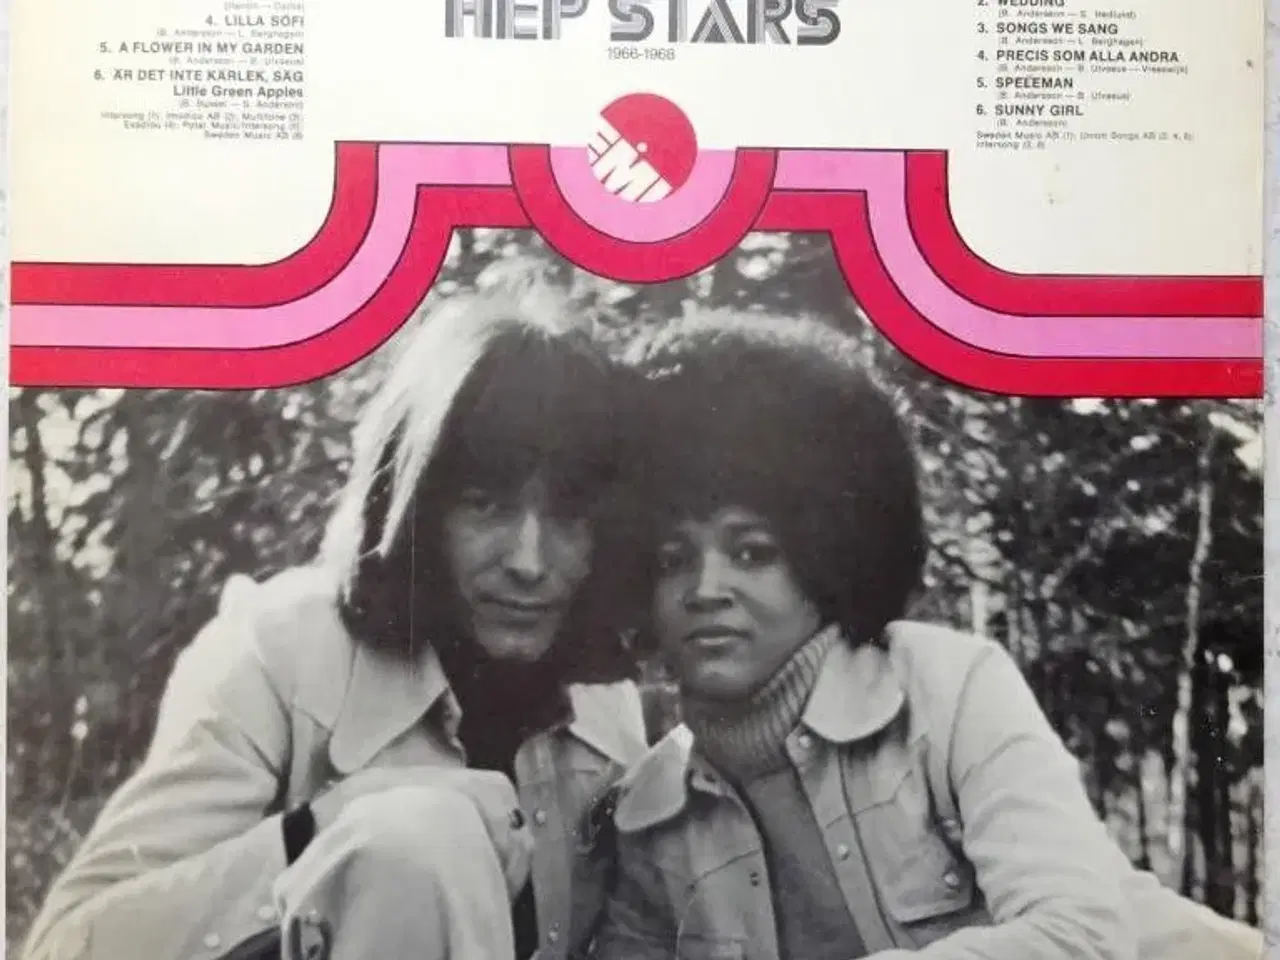 Billede 2 - Svenne og Lotta samt Hepstars. Vinyl LP